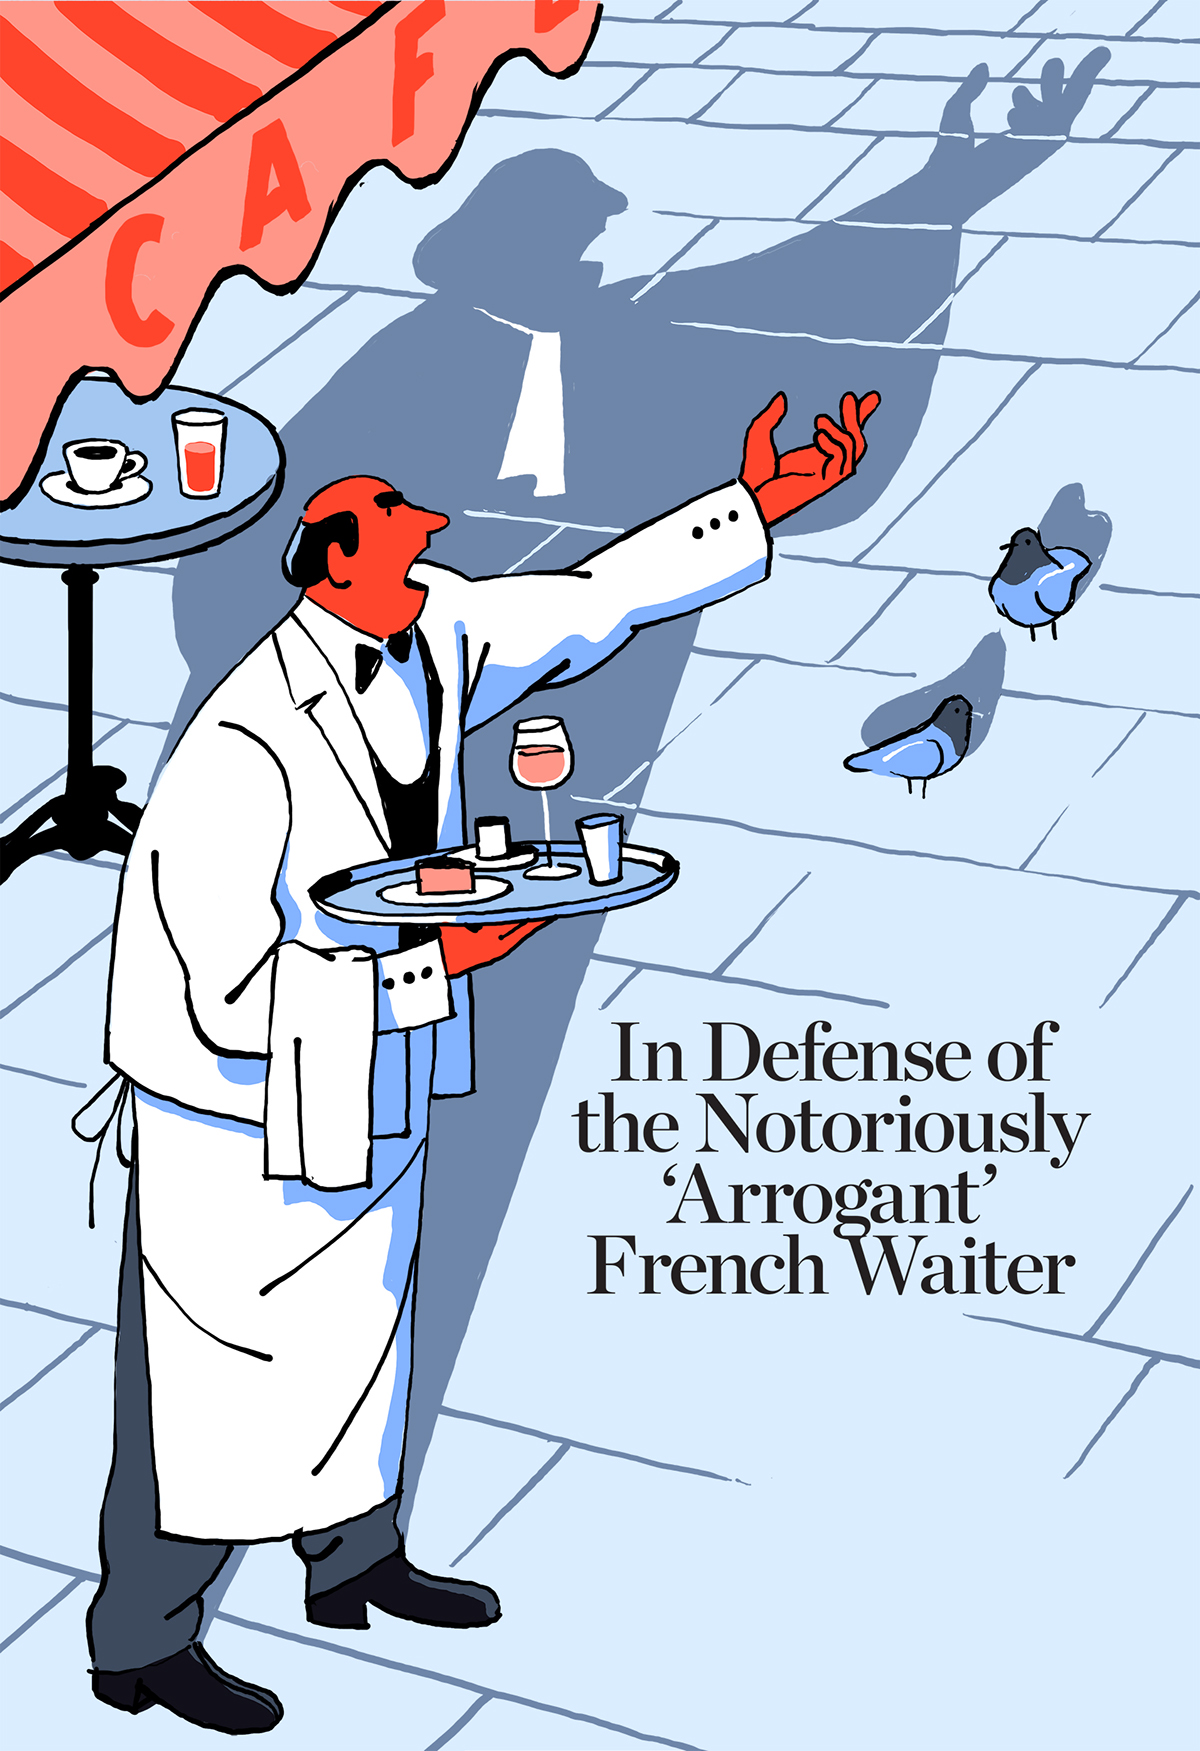 French cafe waiter WALL STREET JOURNAL rejected sketch Paris arrogant defense